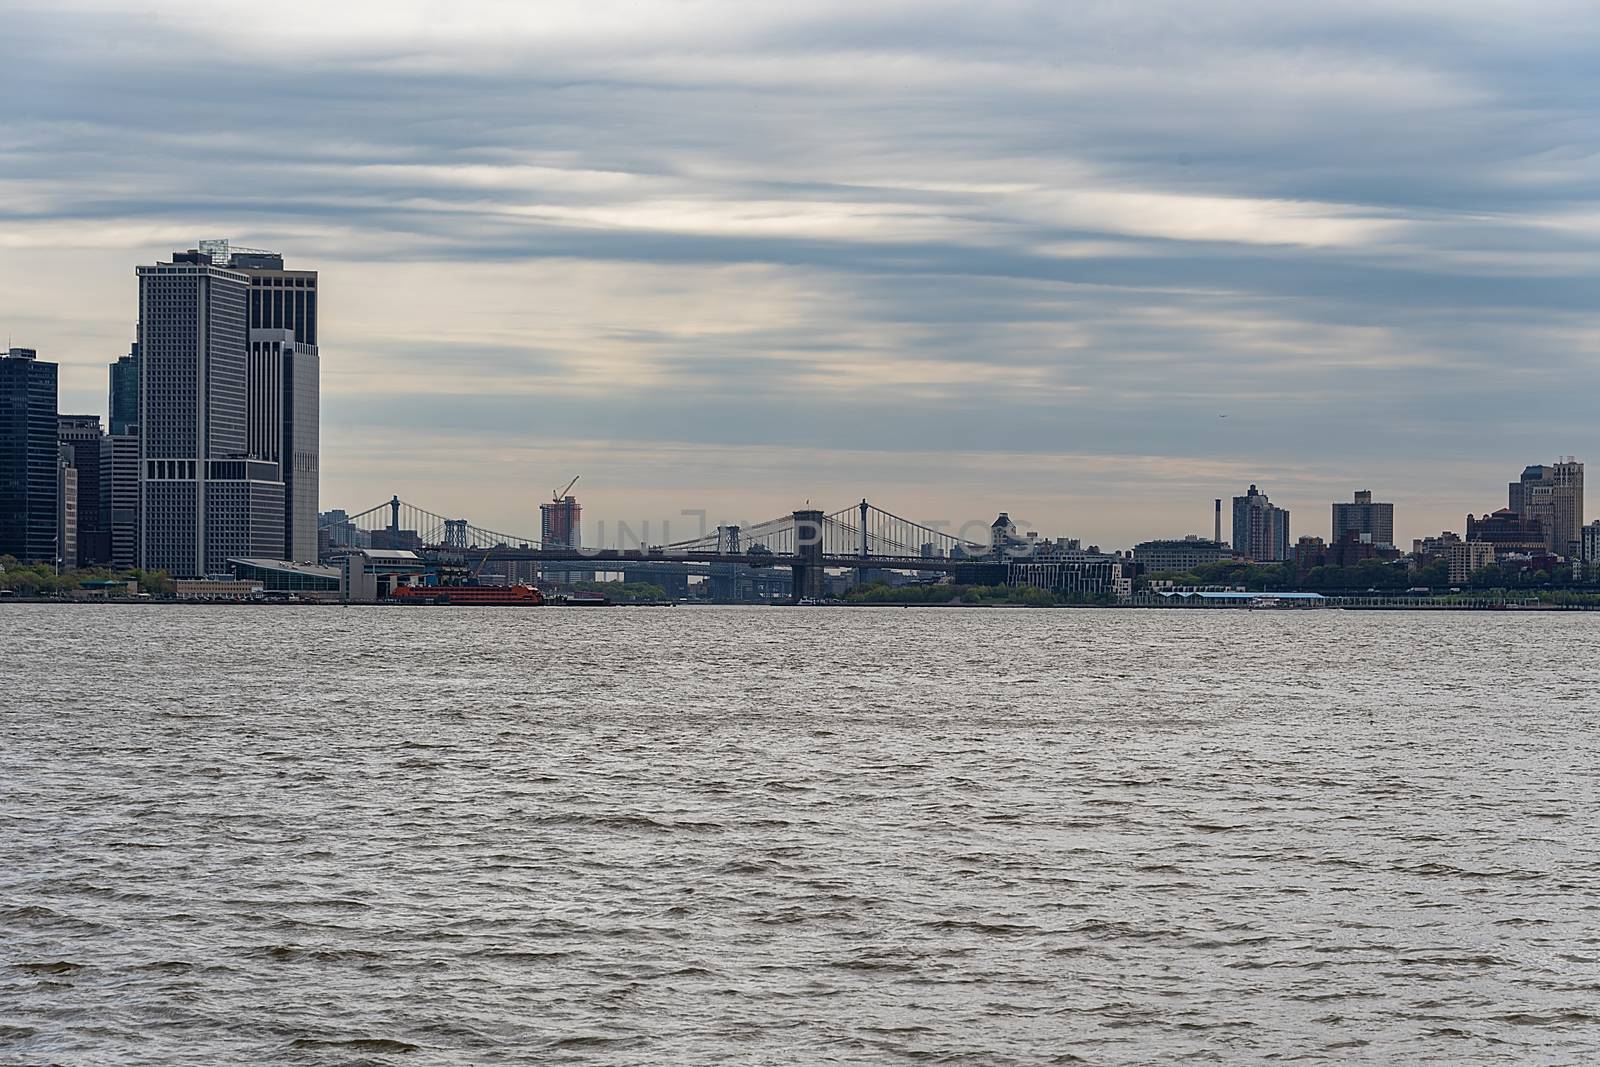 USA, New York, Staten Island - May 2019: Brooklyn and Manhattan bridges